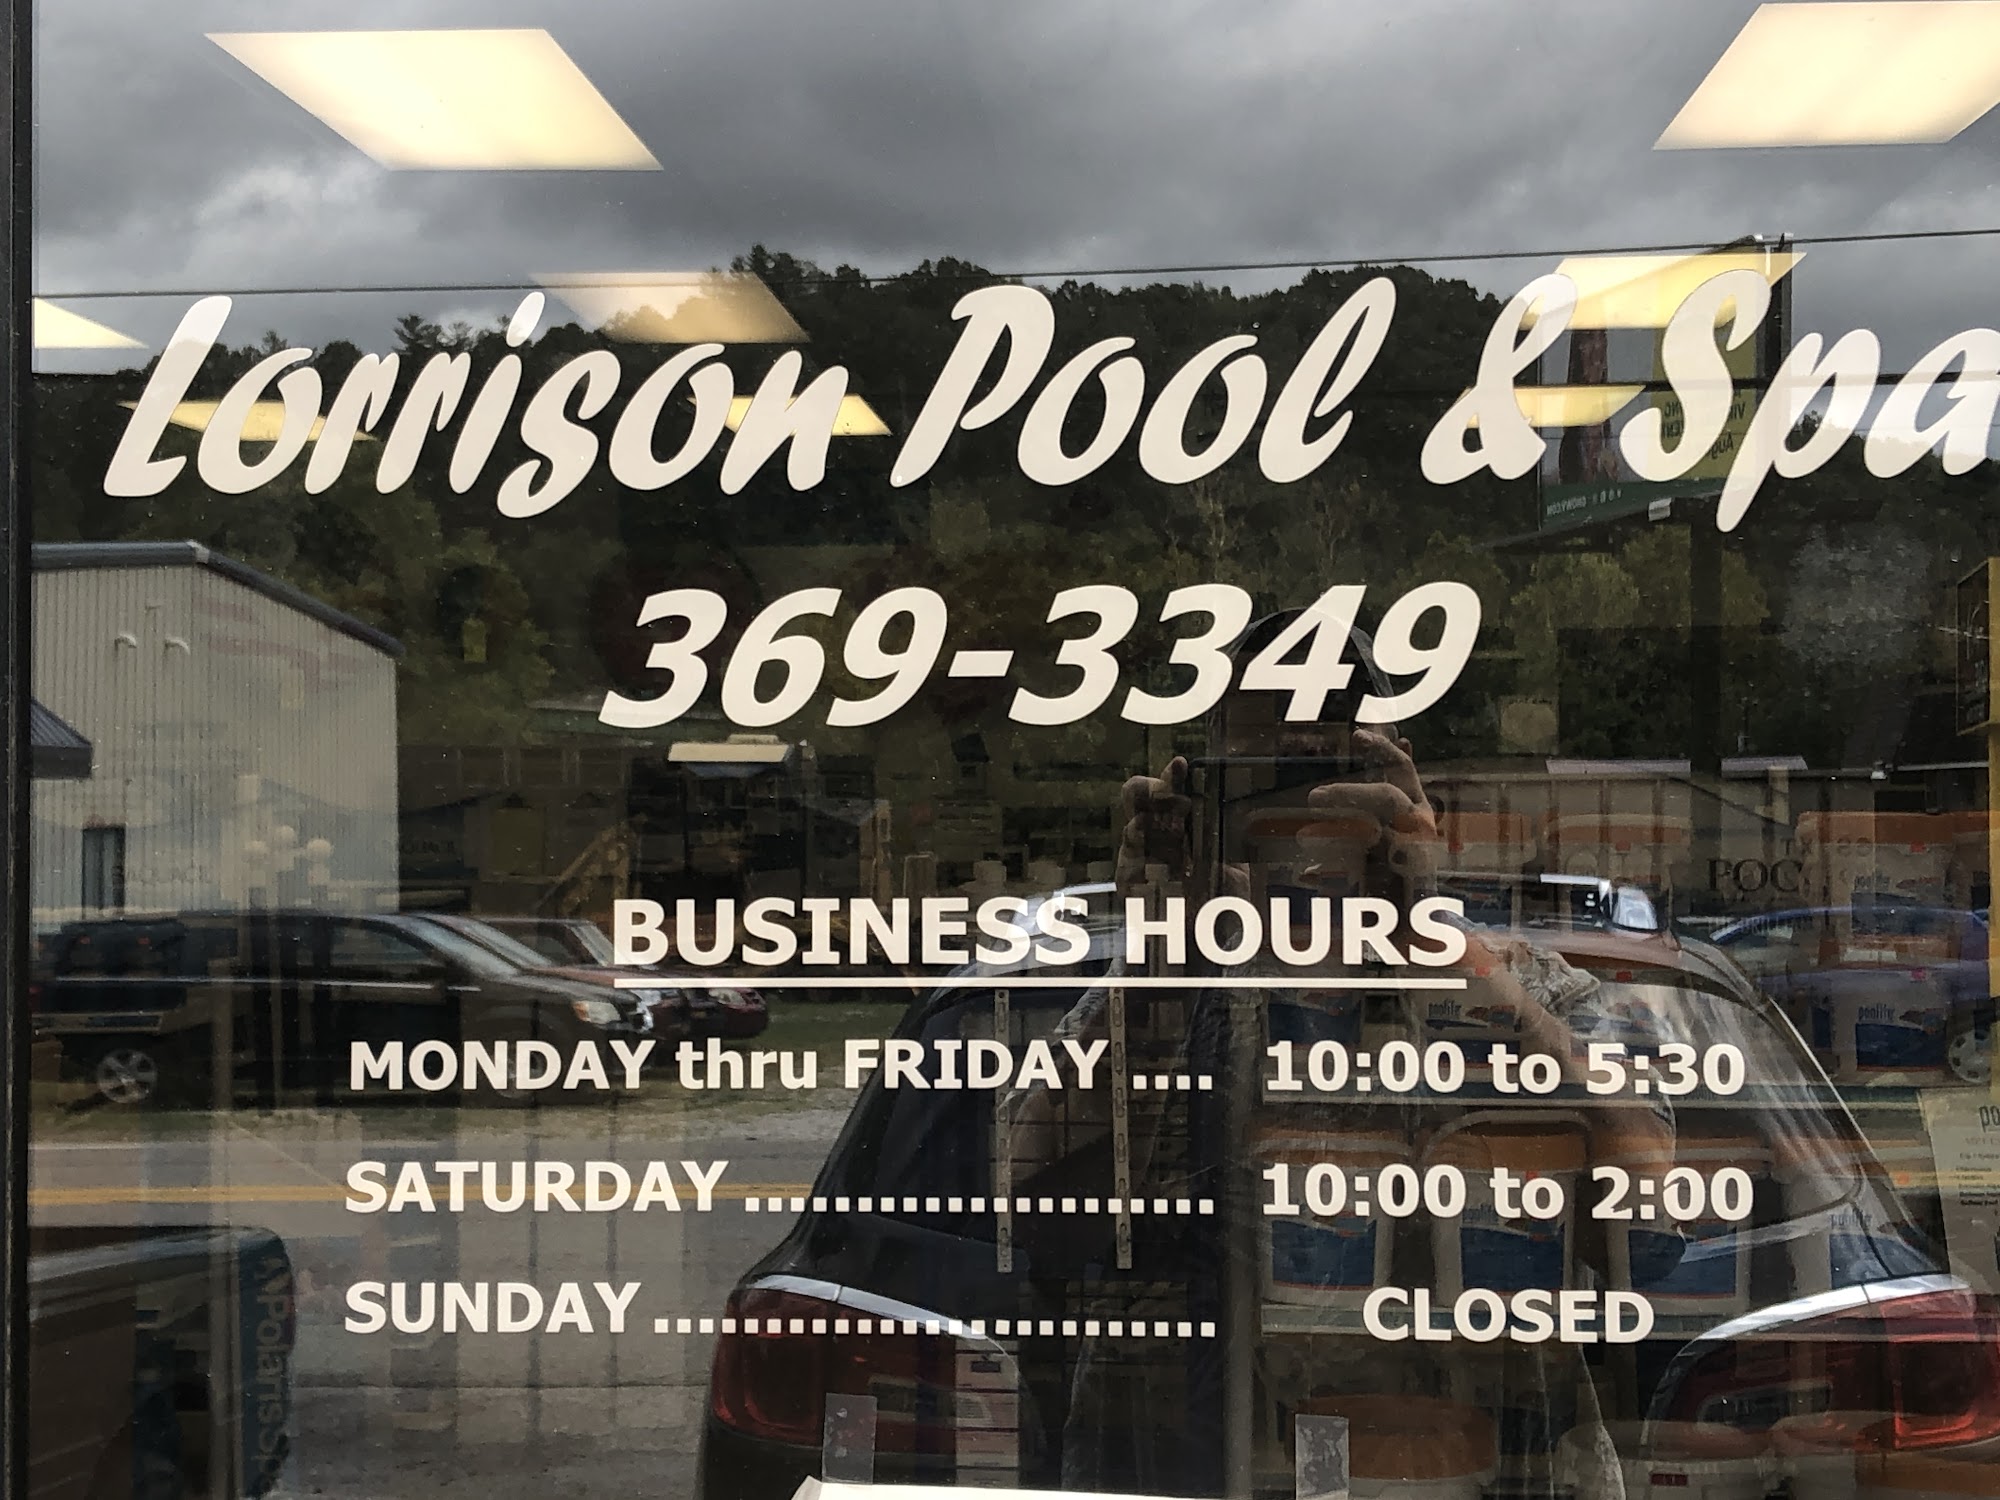 Lorrison Pool & Spa Inc 1235 Smoot Ave, Danville West Virginia 25053